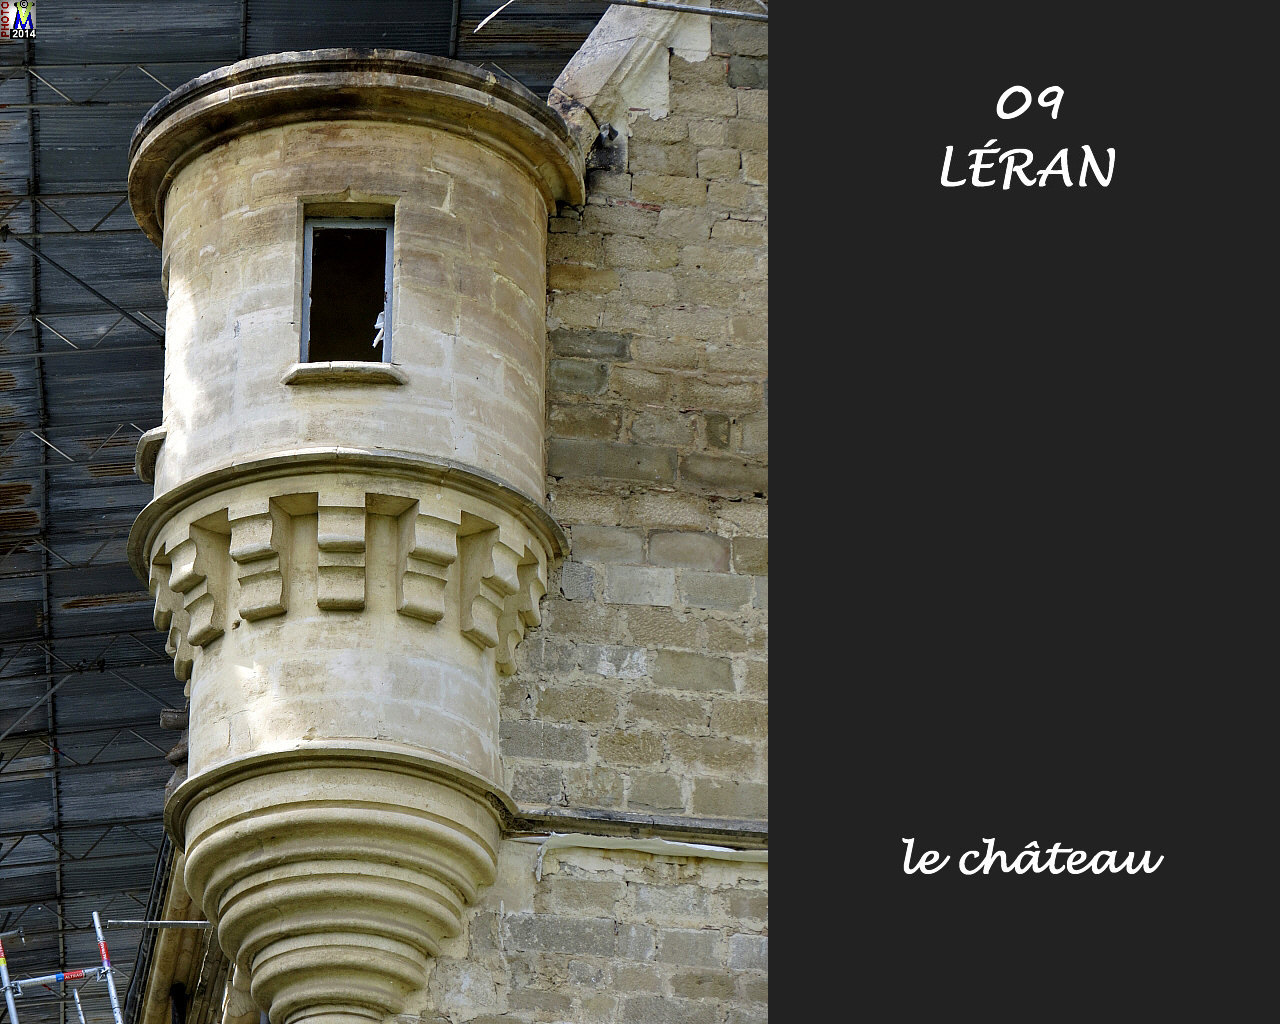 09LERAN_chateau_106.jpg